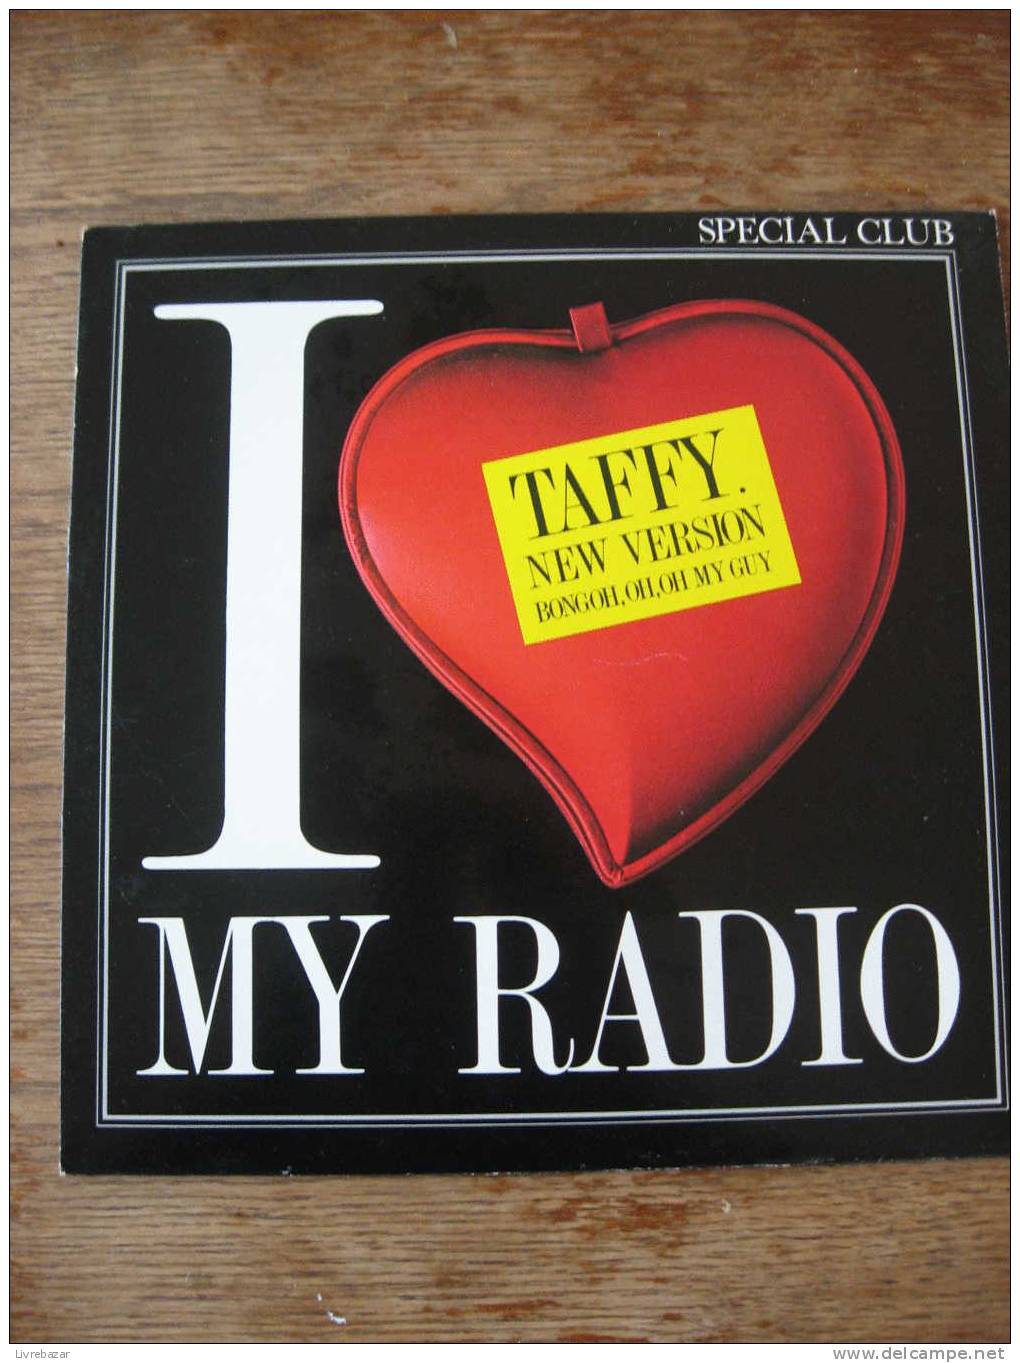 I LOVE MY RADIO TAFFY NEW VERSION SPECIAL CLUB - 45 Rpm - Maxi-Single